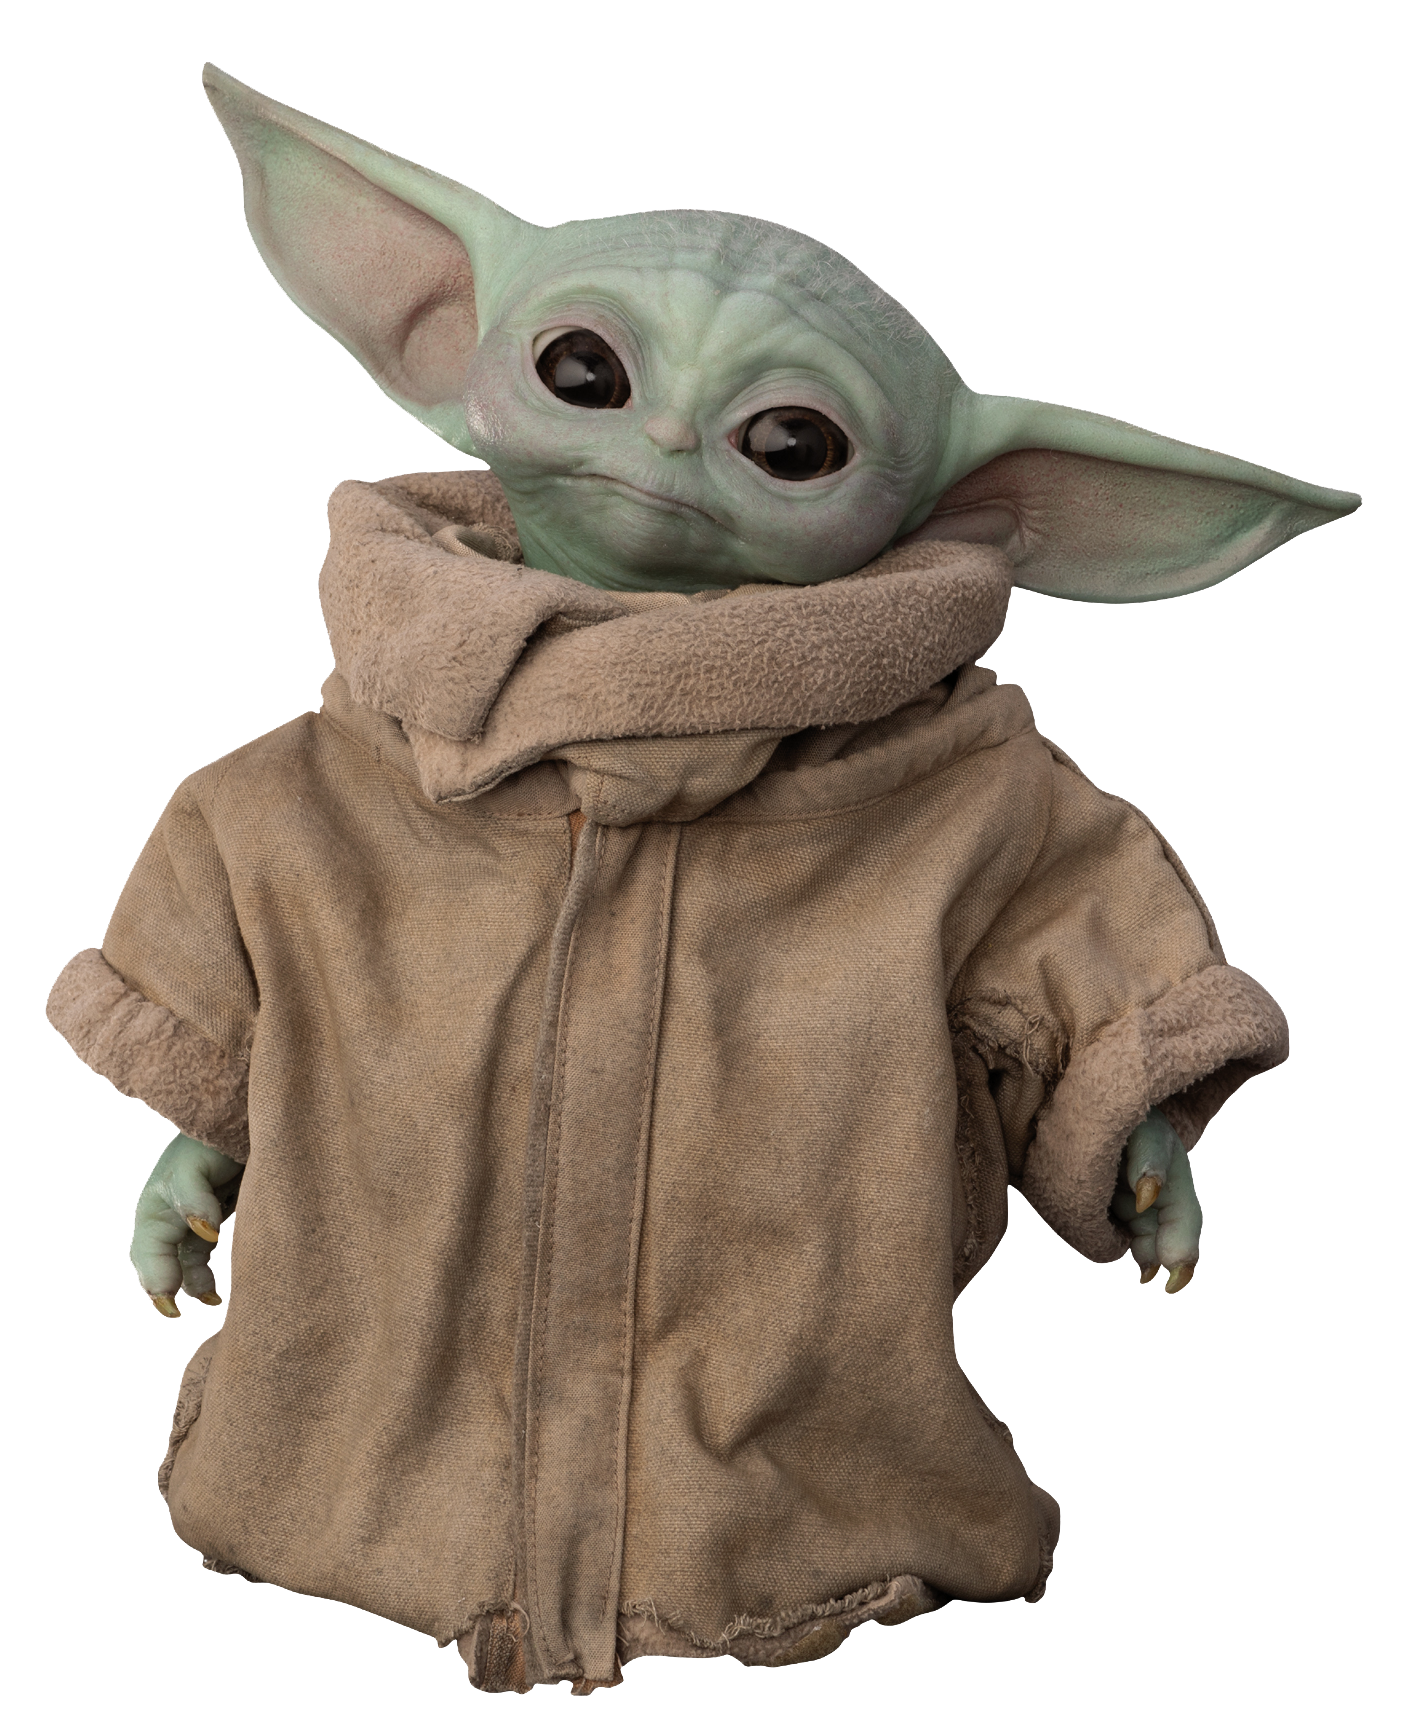 Comment Baby Yoda a sauvé «Star Wars»